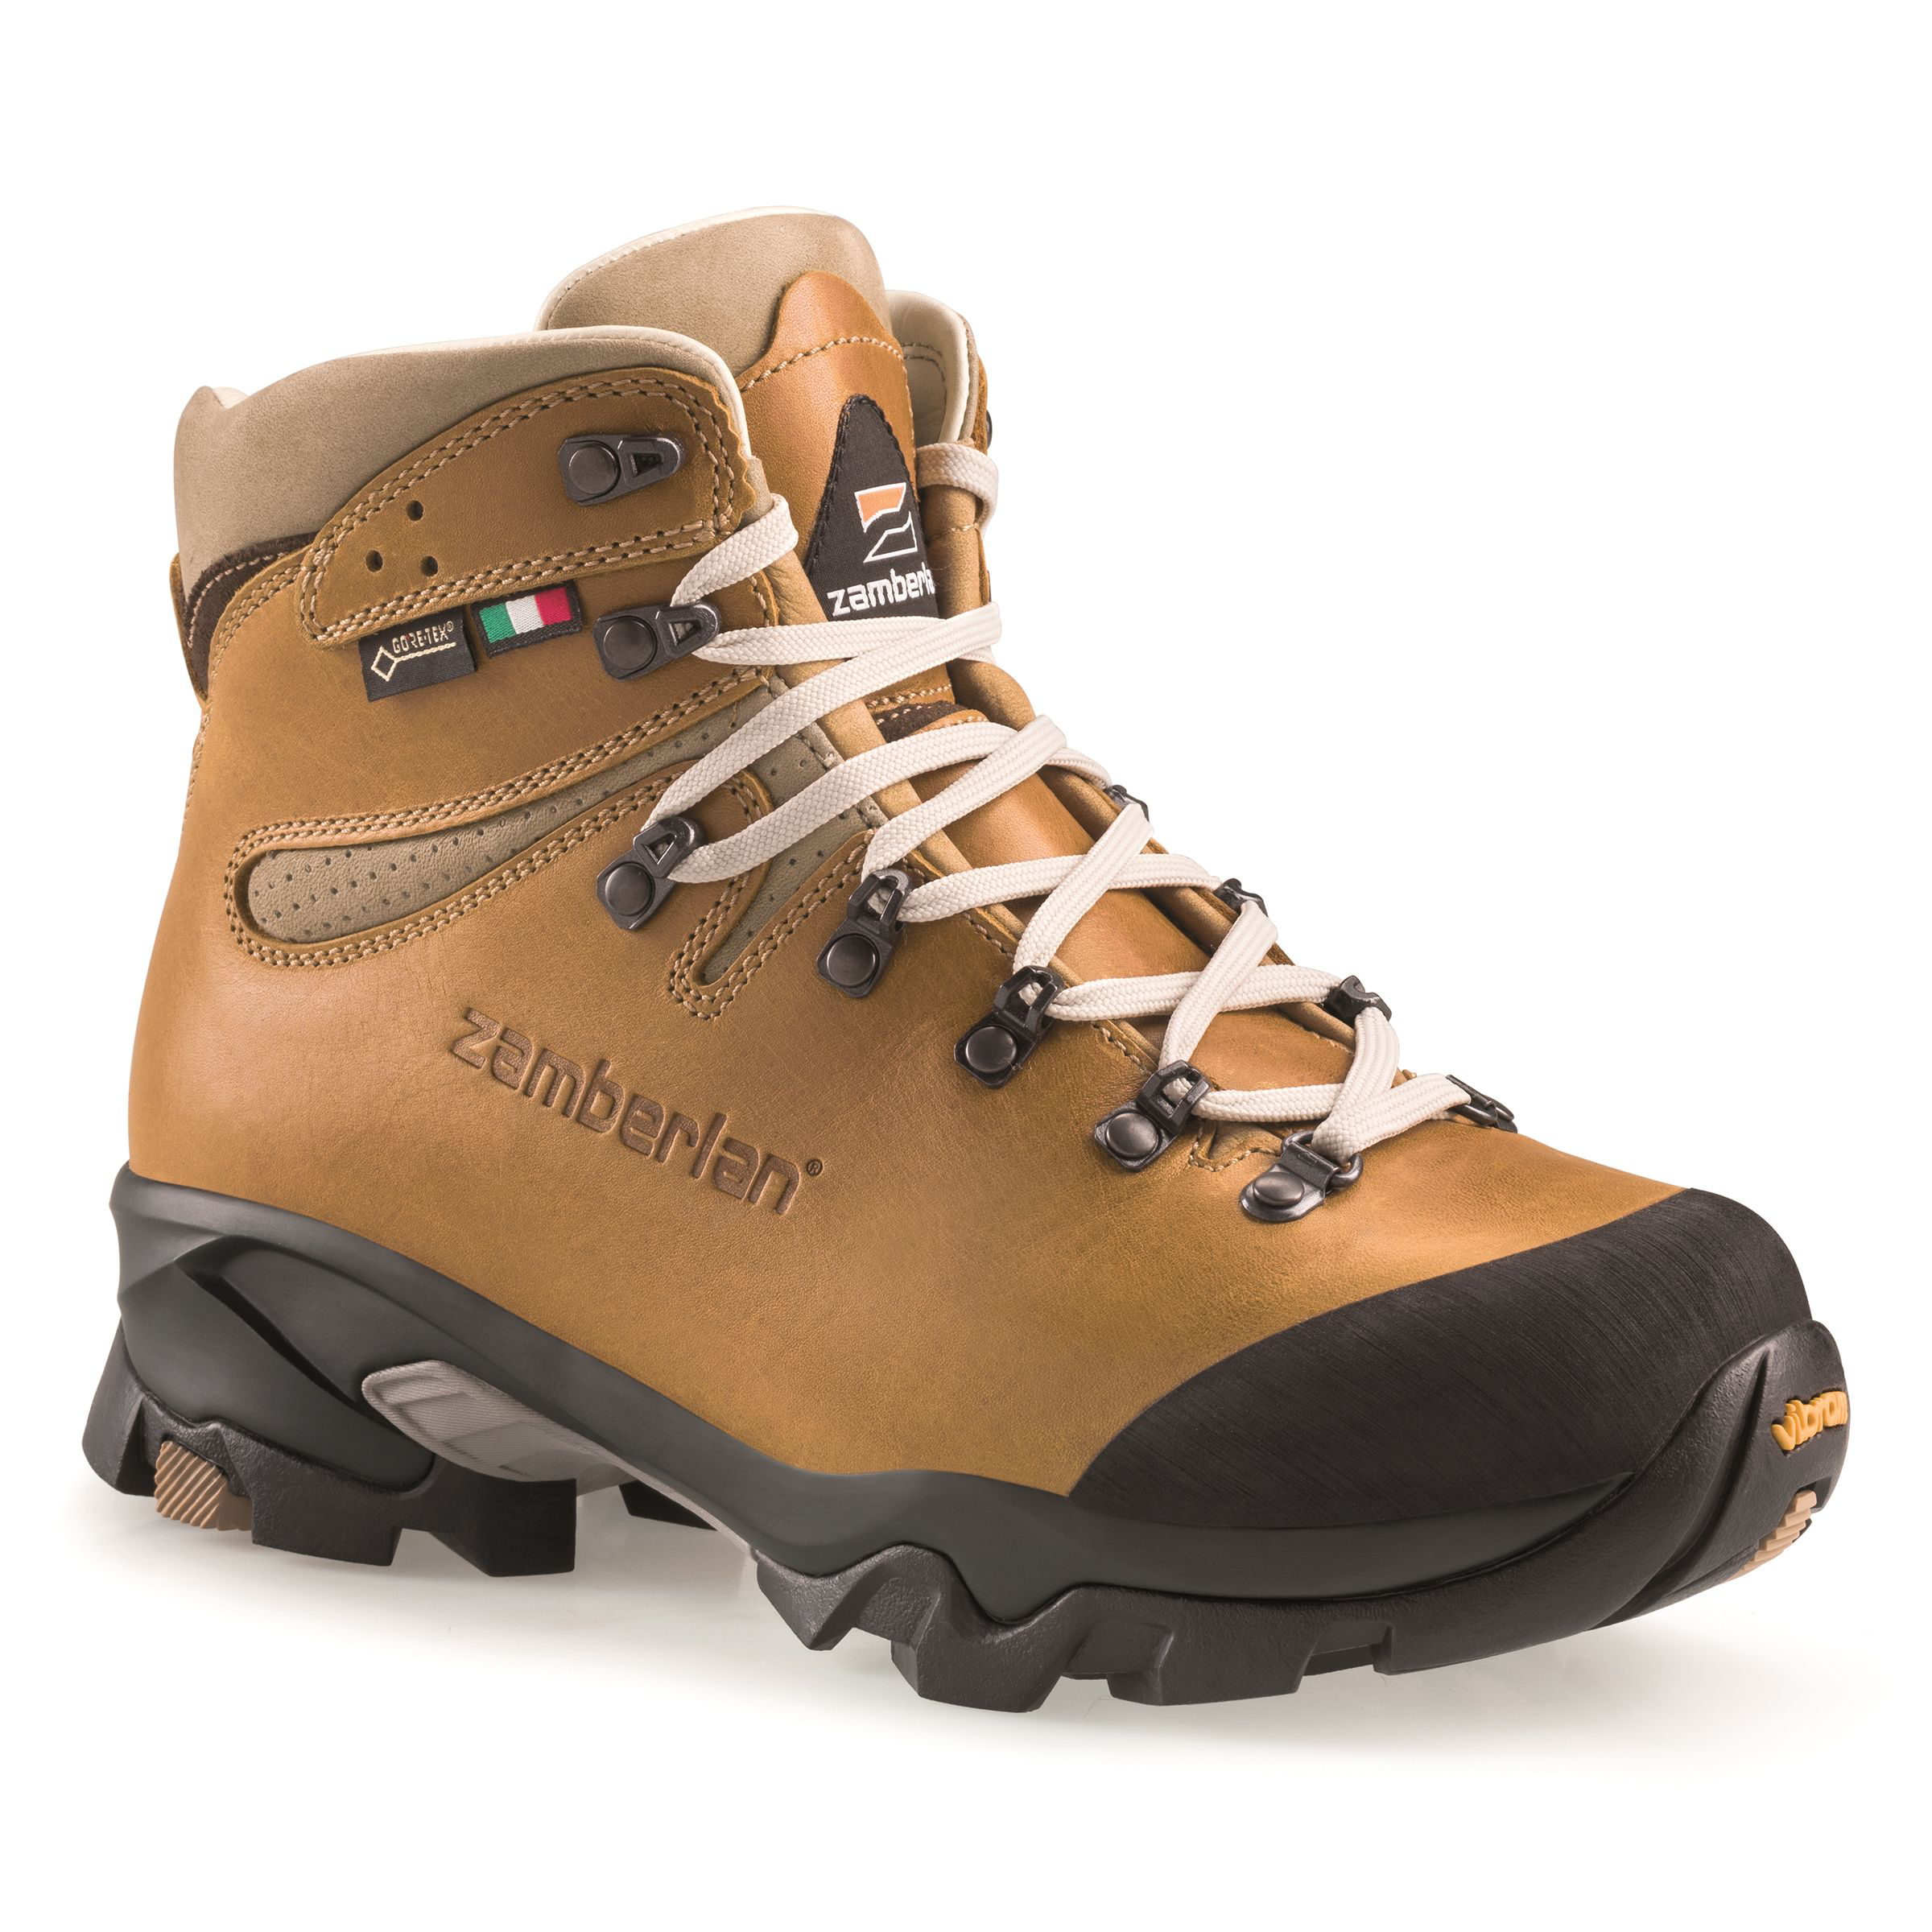 Zamberlan 1996 Vioz Lux GTX RR Waterproof Hiking Boots for Ladies - Brown - 8M